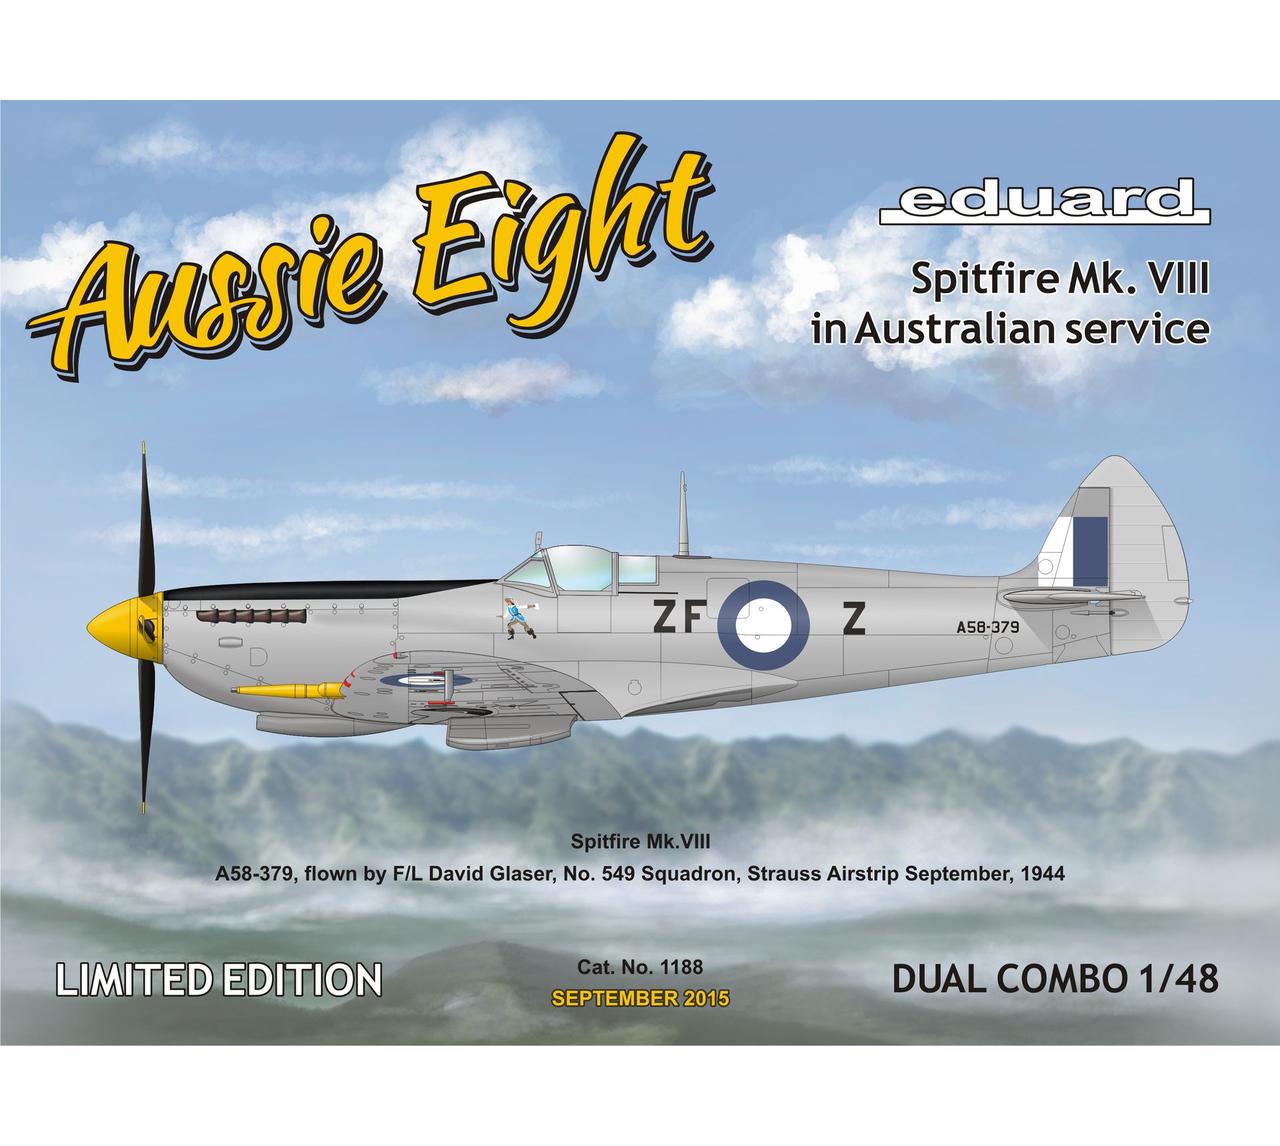 1 - Eduard Spitfire-kavalkad, Aussie Eight #1 klar, Aussie Eight #2 NY!, Bonus: Airfix Spitfire XII - Sida 12 04